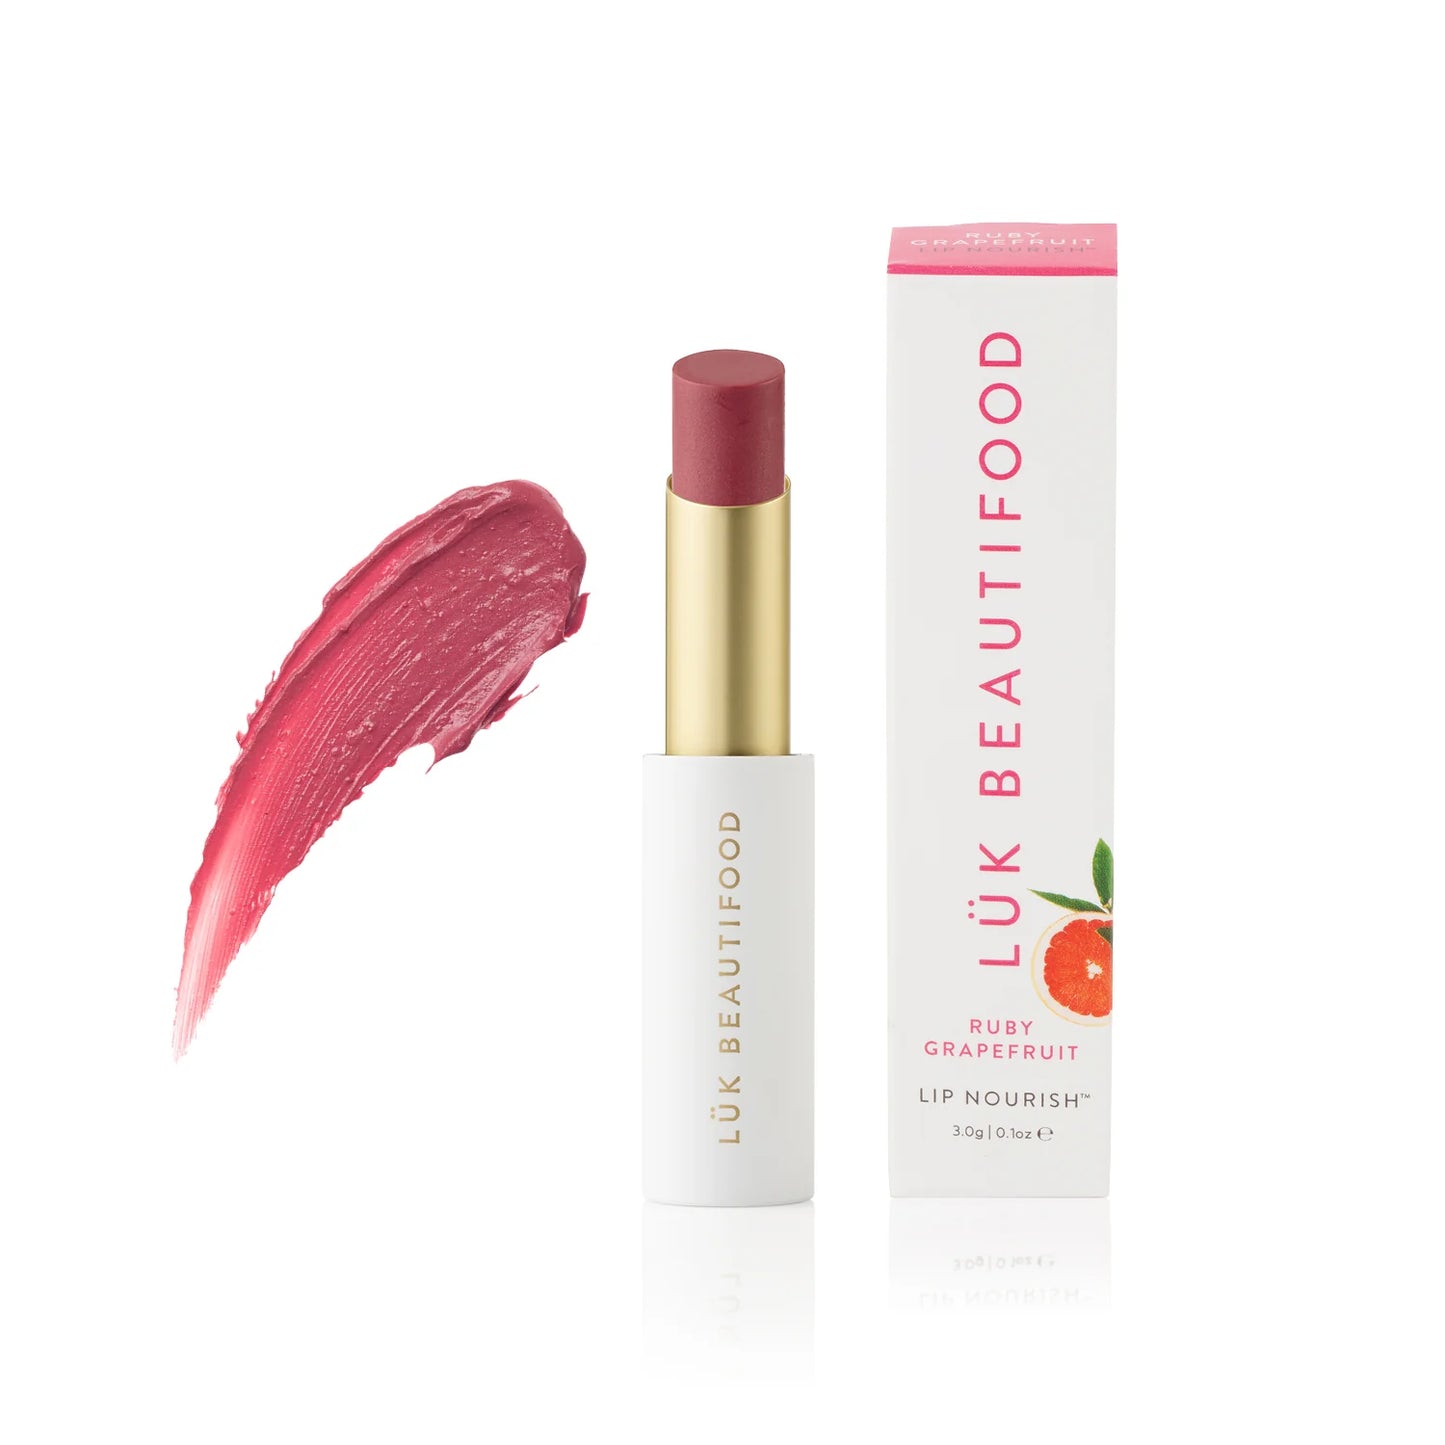 Lip Nourish™ - Ruby Grapefruit Rich pink blush. Medium buildable coverage. Tastes of pink grapefruit and orange.